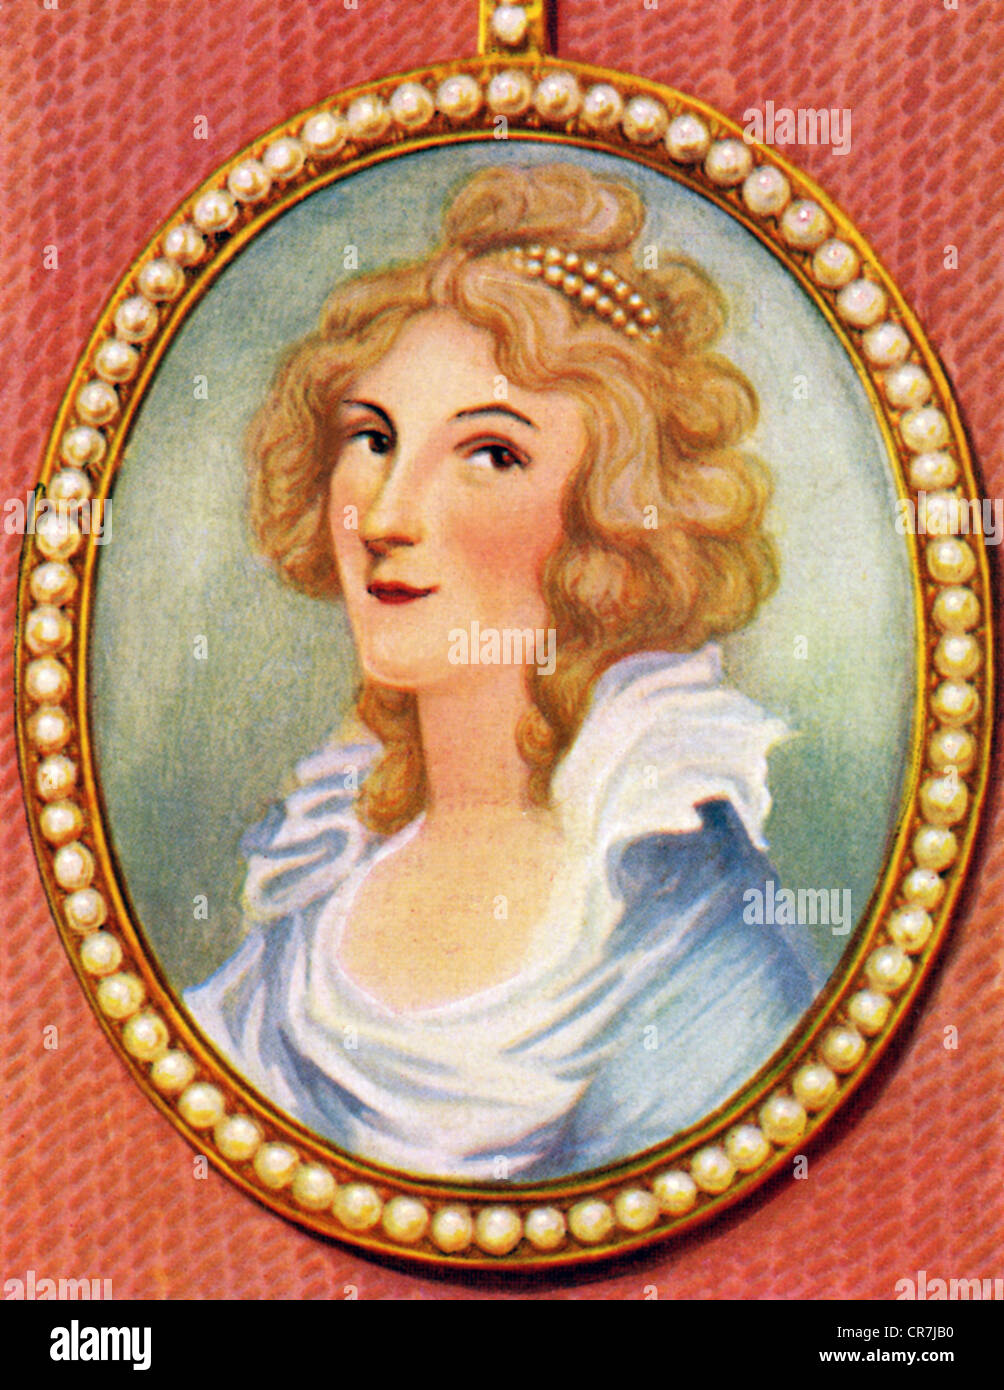 Cavendish, Elizabeth, 13.5.1759 - 30.3.1824, Duchess of Devonshire, portrait, colour print after miniature by Richard Cosway, circa 1810, cigarette card, Germany, 1933, Stock Photo